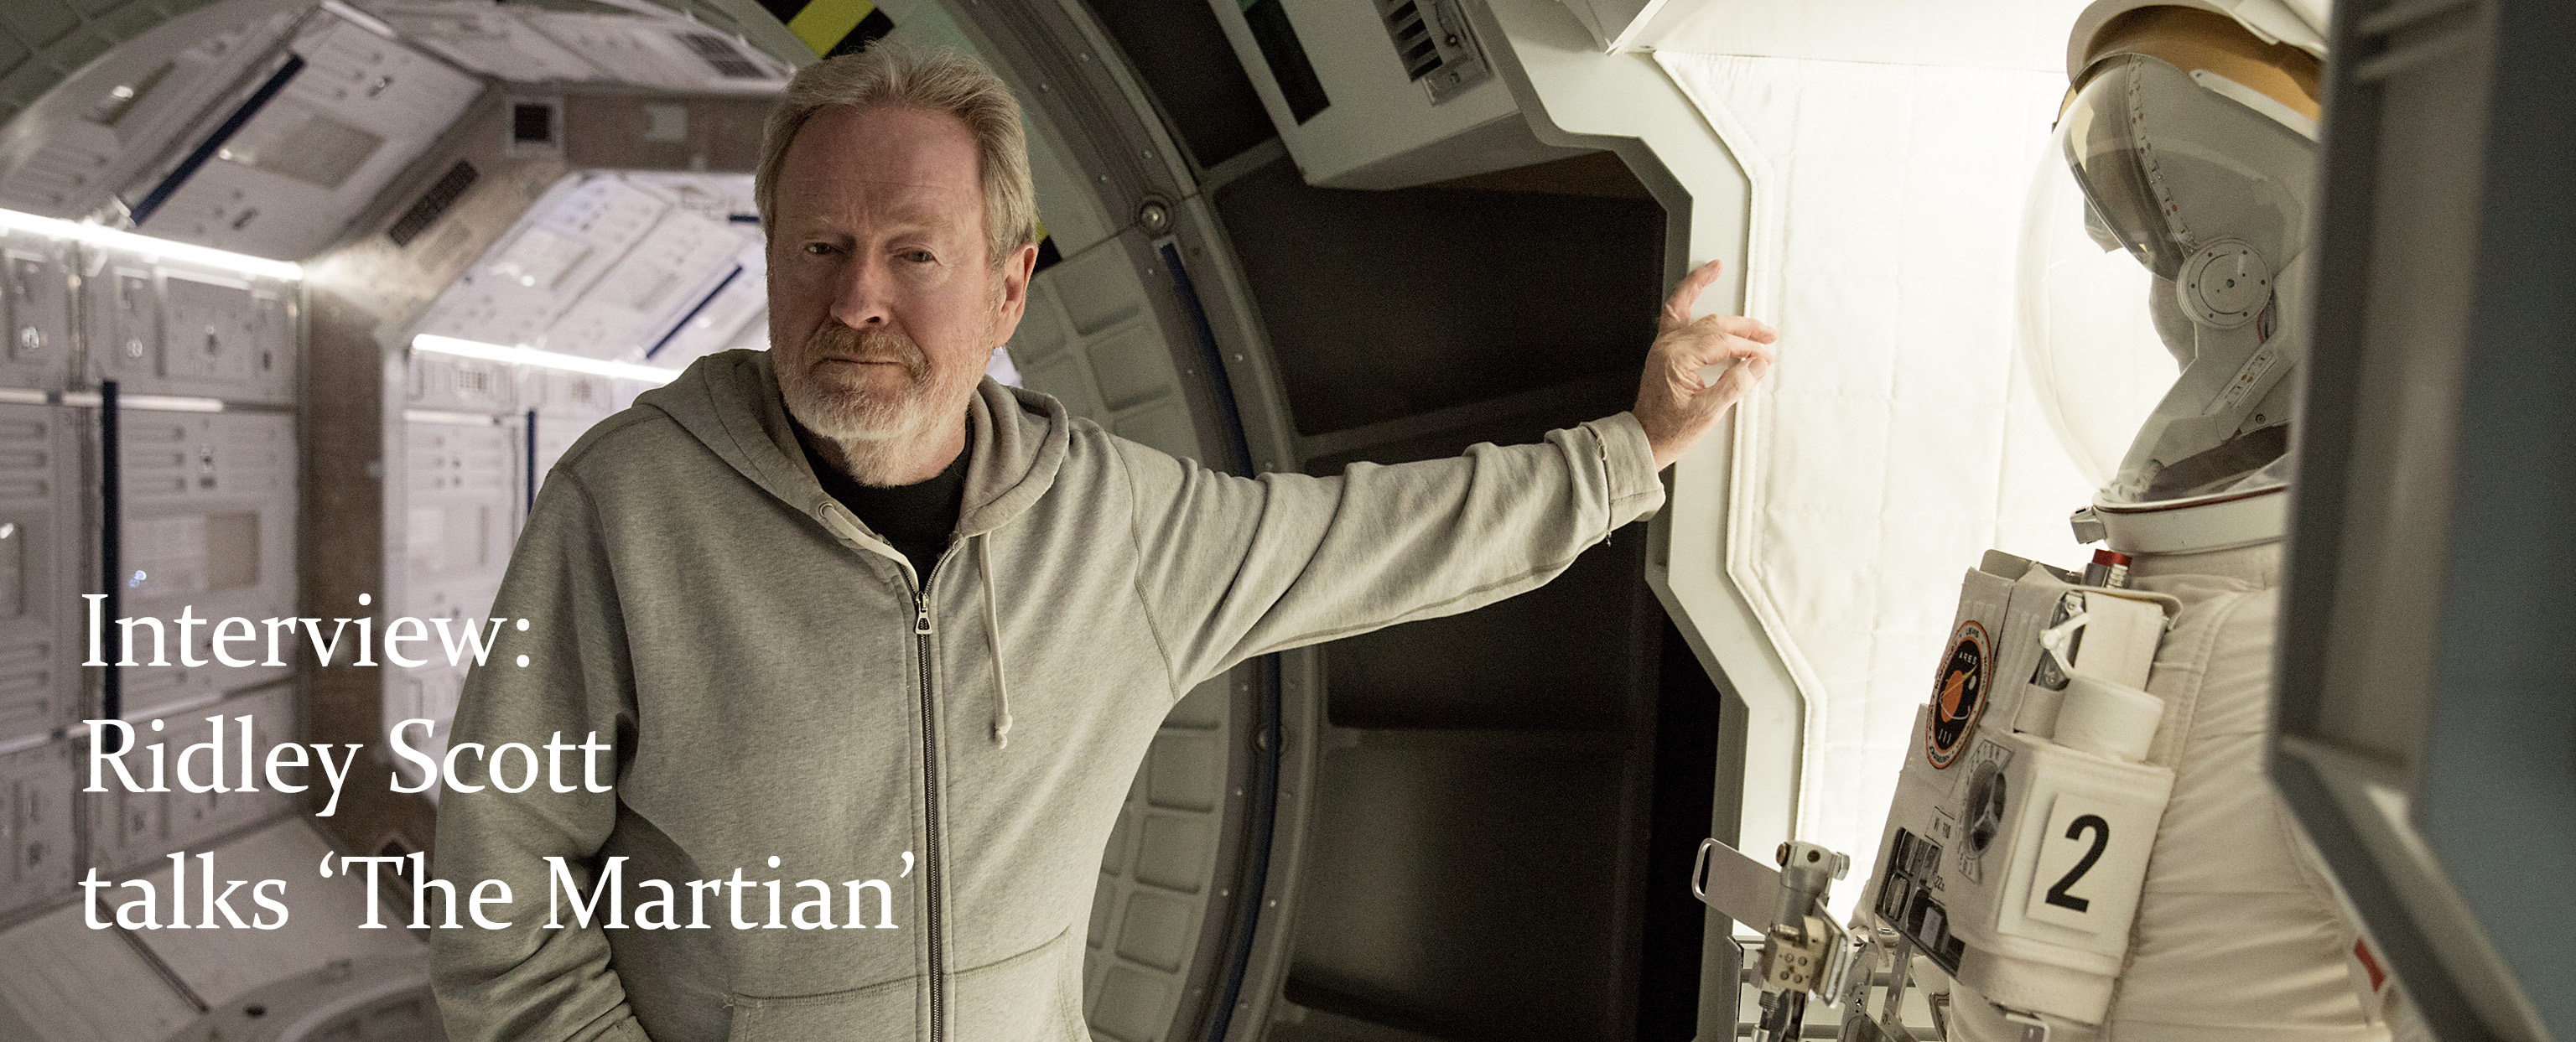 Ridley Scott on the set of 'The Martian' (photo: 20th Century Fox)